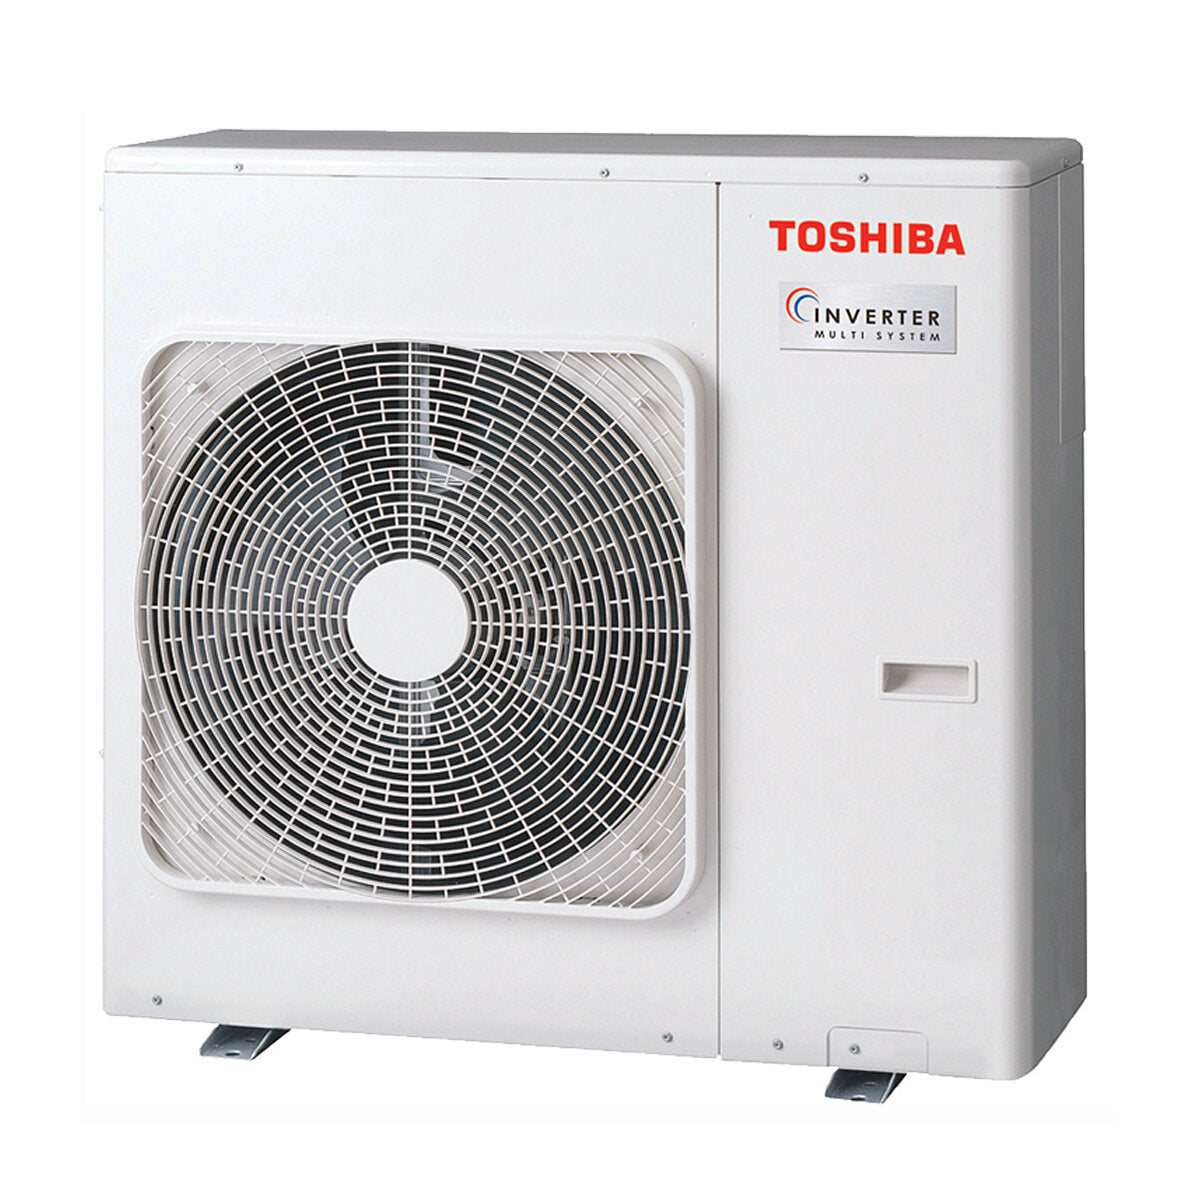 Toshiba Ductable Air Conditioner U2 penta split 9000 + 9000 + 9000 + 9000 + 16000 BTU inverter A ++ outdoor unit 10.0 kW